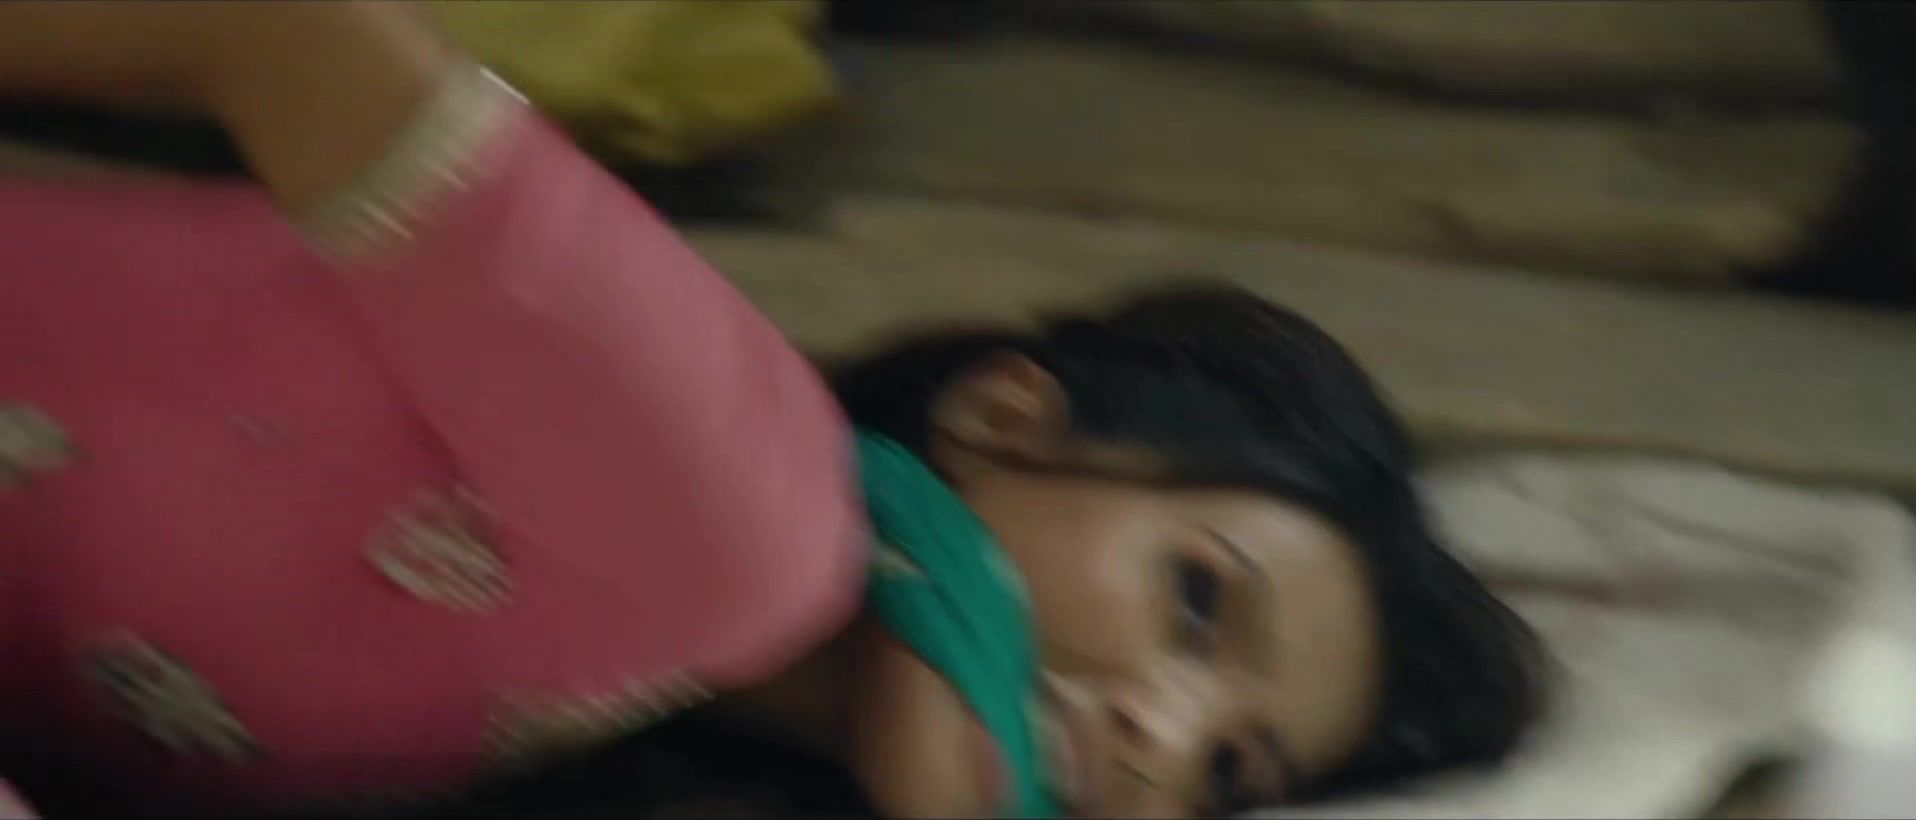 18Comix Geeta Basra - Movie Bondage 3Rat